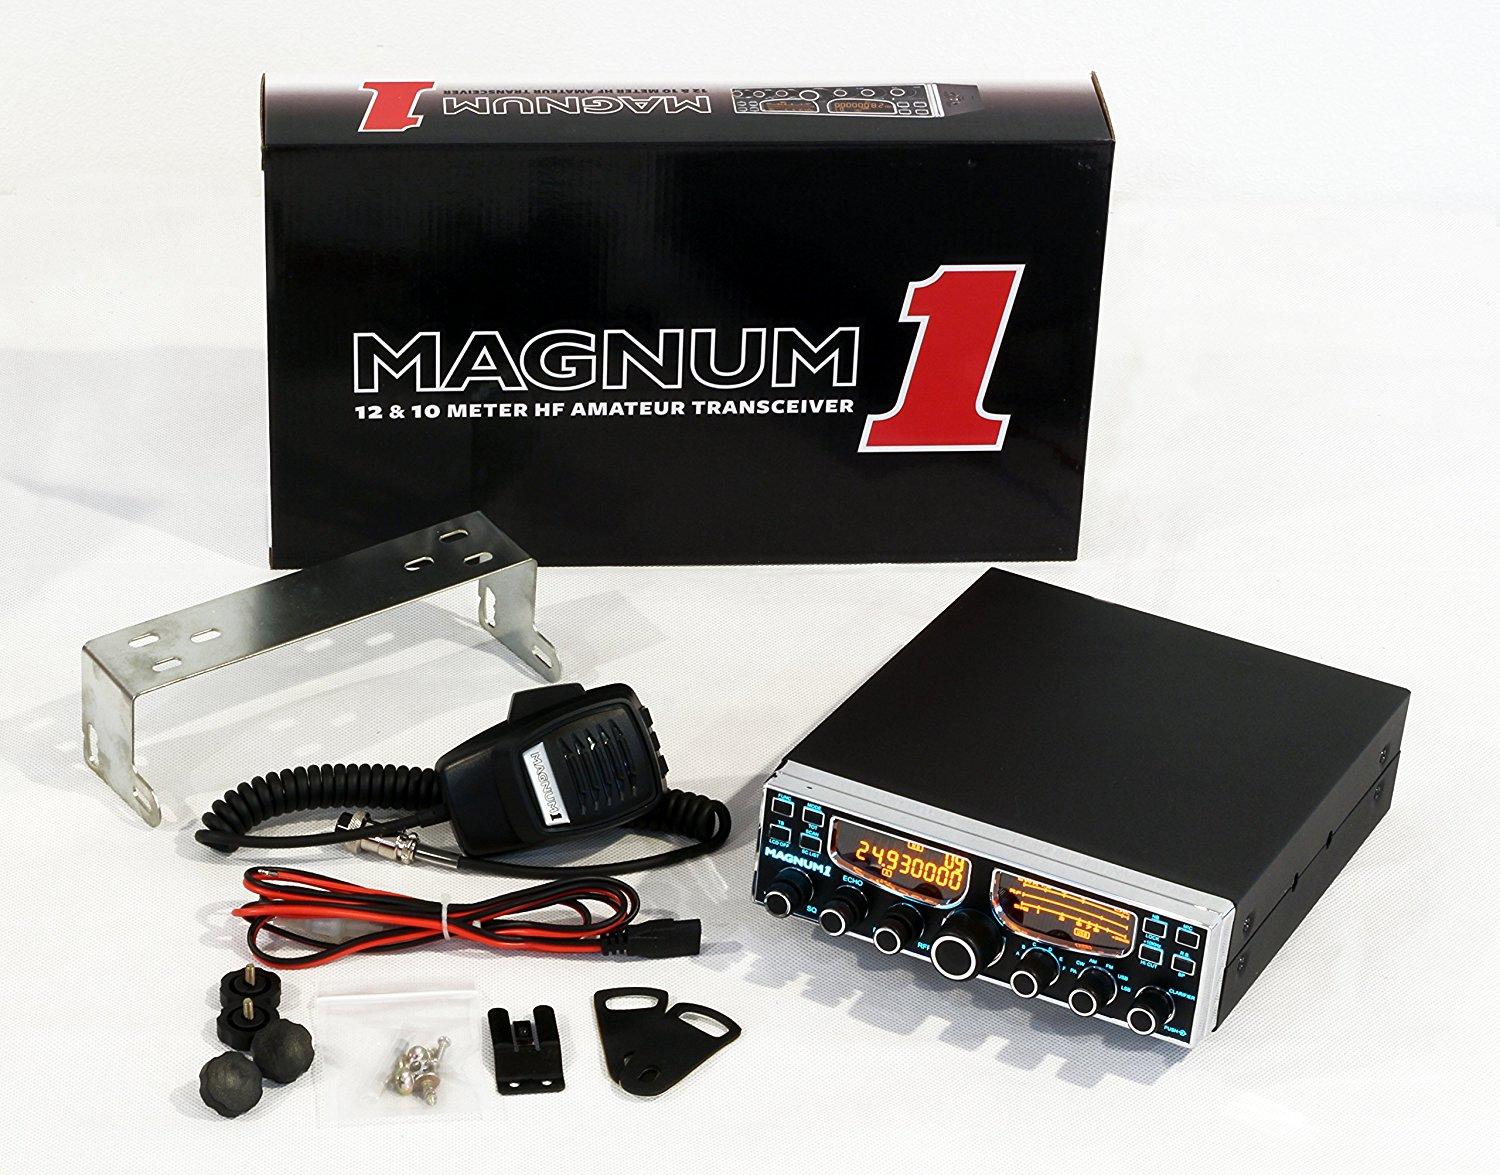 Magnum Magnum 1 Mobile Amateur Radio (Dual Band 10 and 12 Meter)